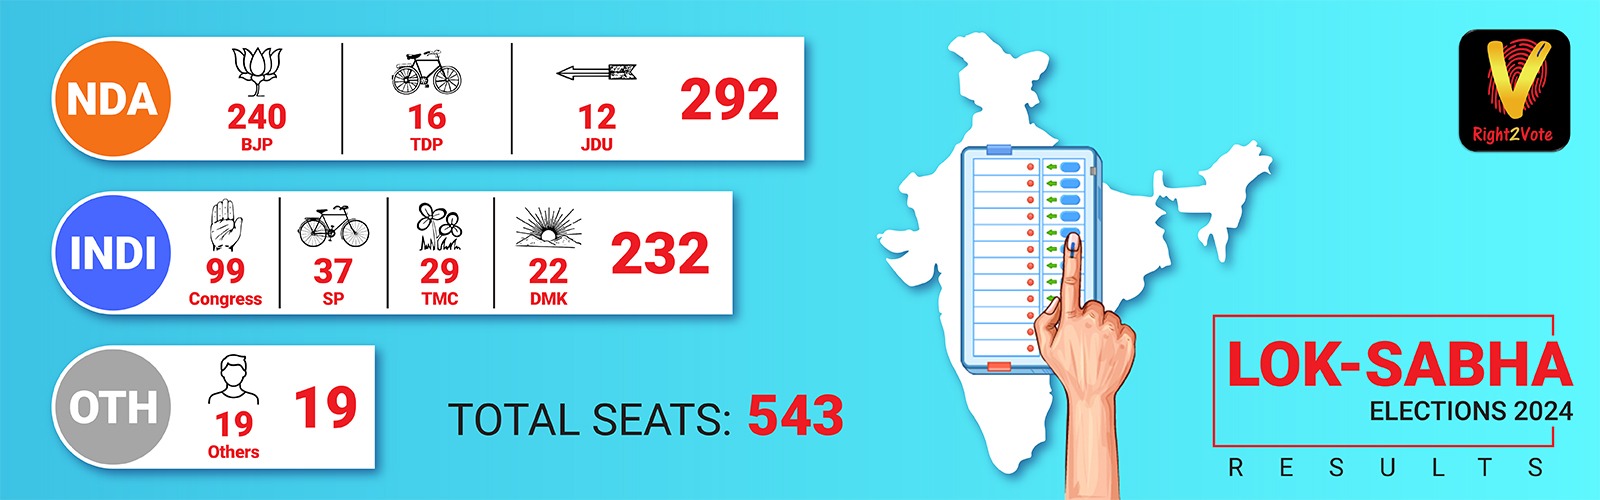 Lok Sabha Election Result 2024 - Right2Vote